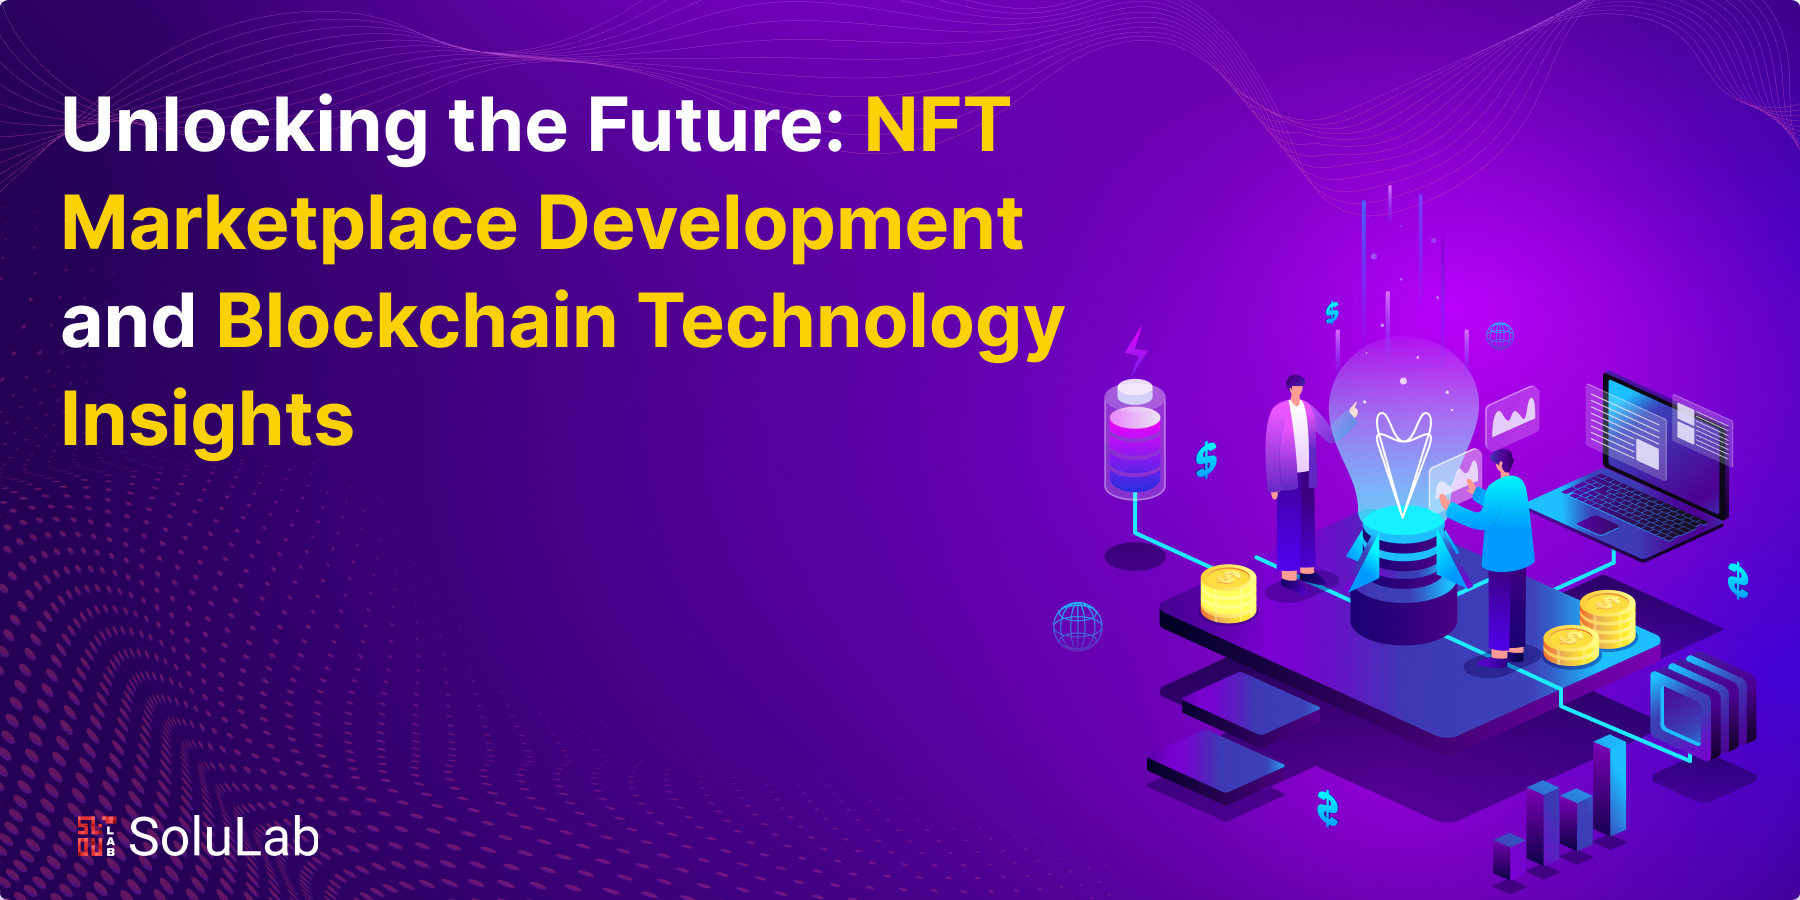 NFT Marketplace Development and Blockchain Technology Insights